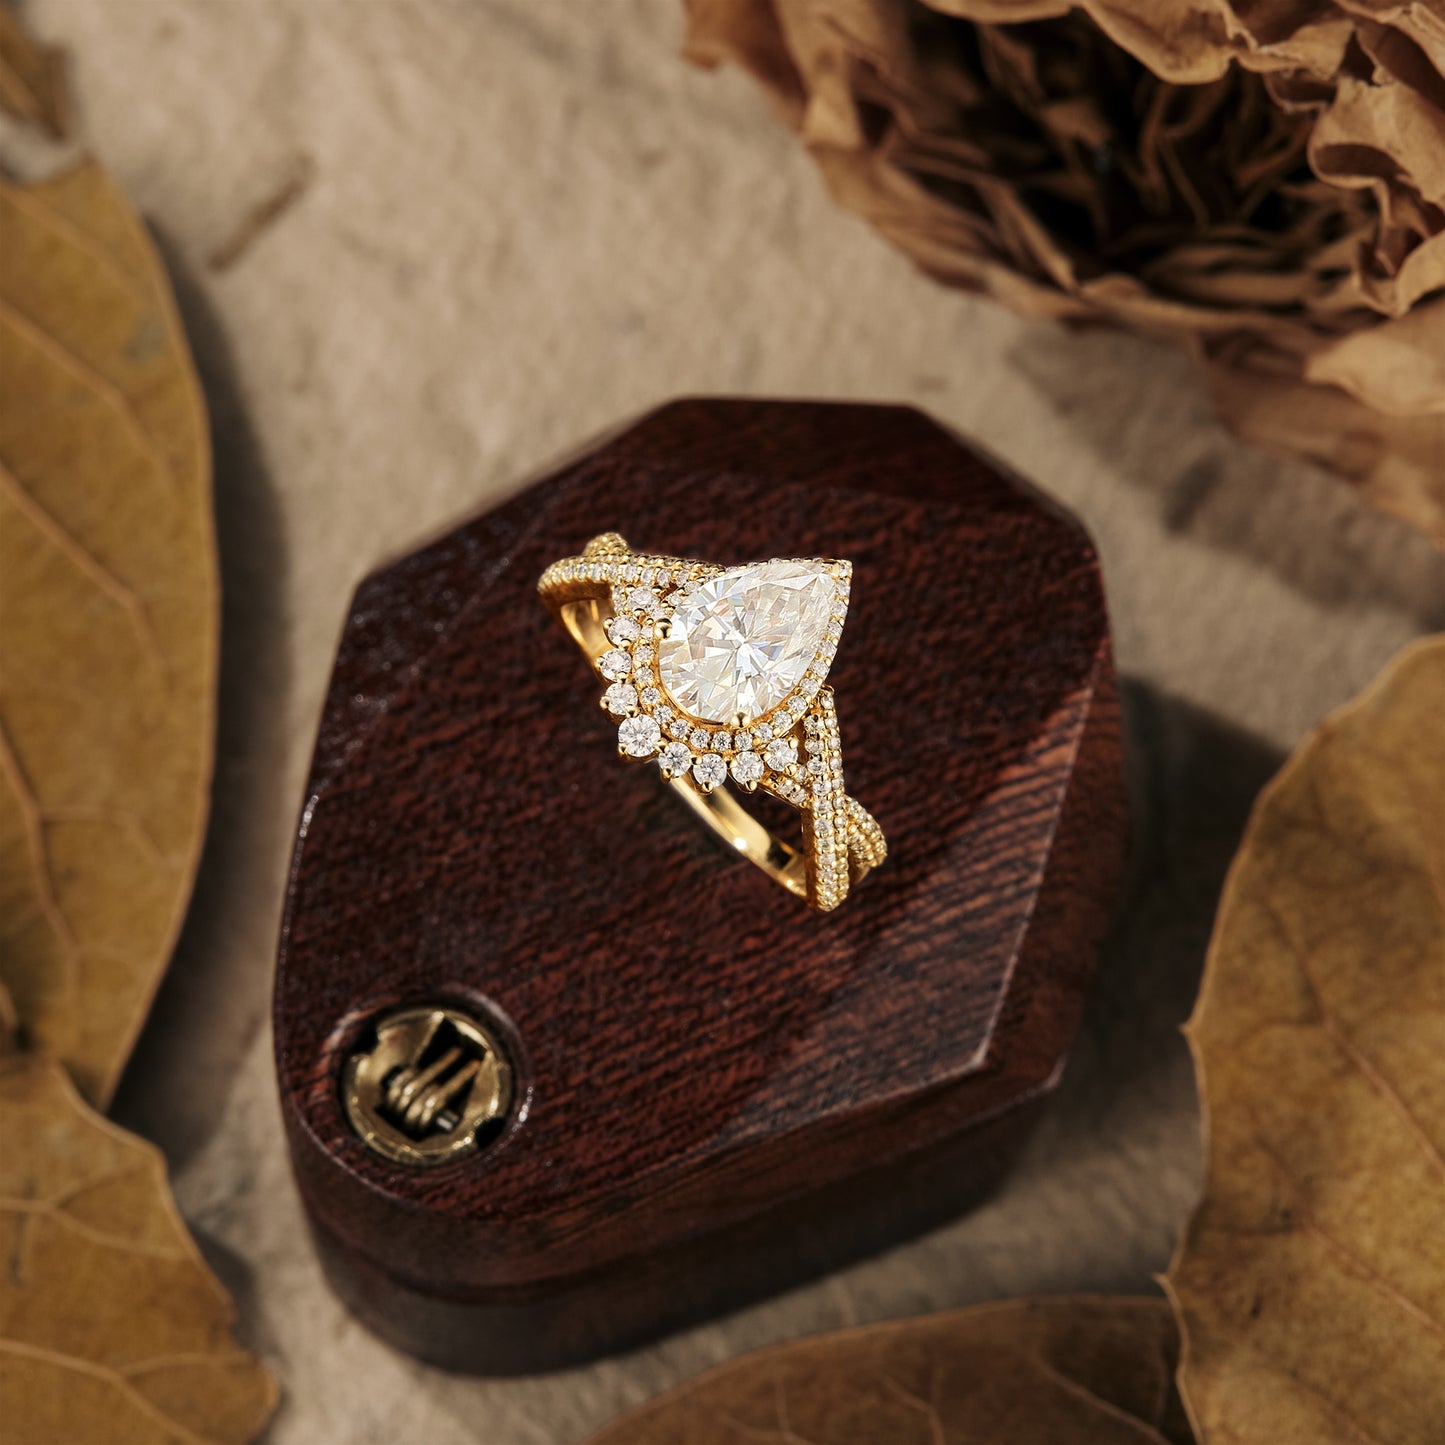 GemsMagic Gorgeous Pear Cut Moissanite Engagement Ring